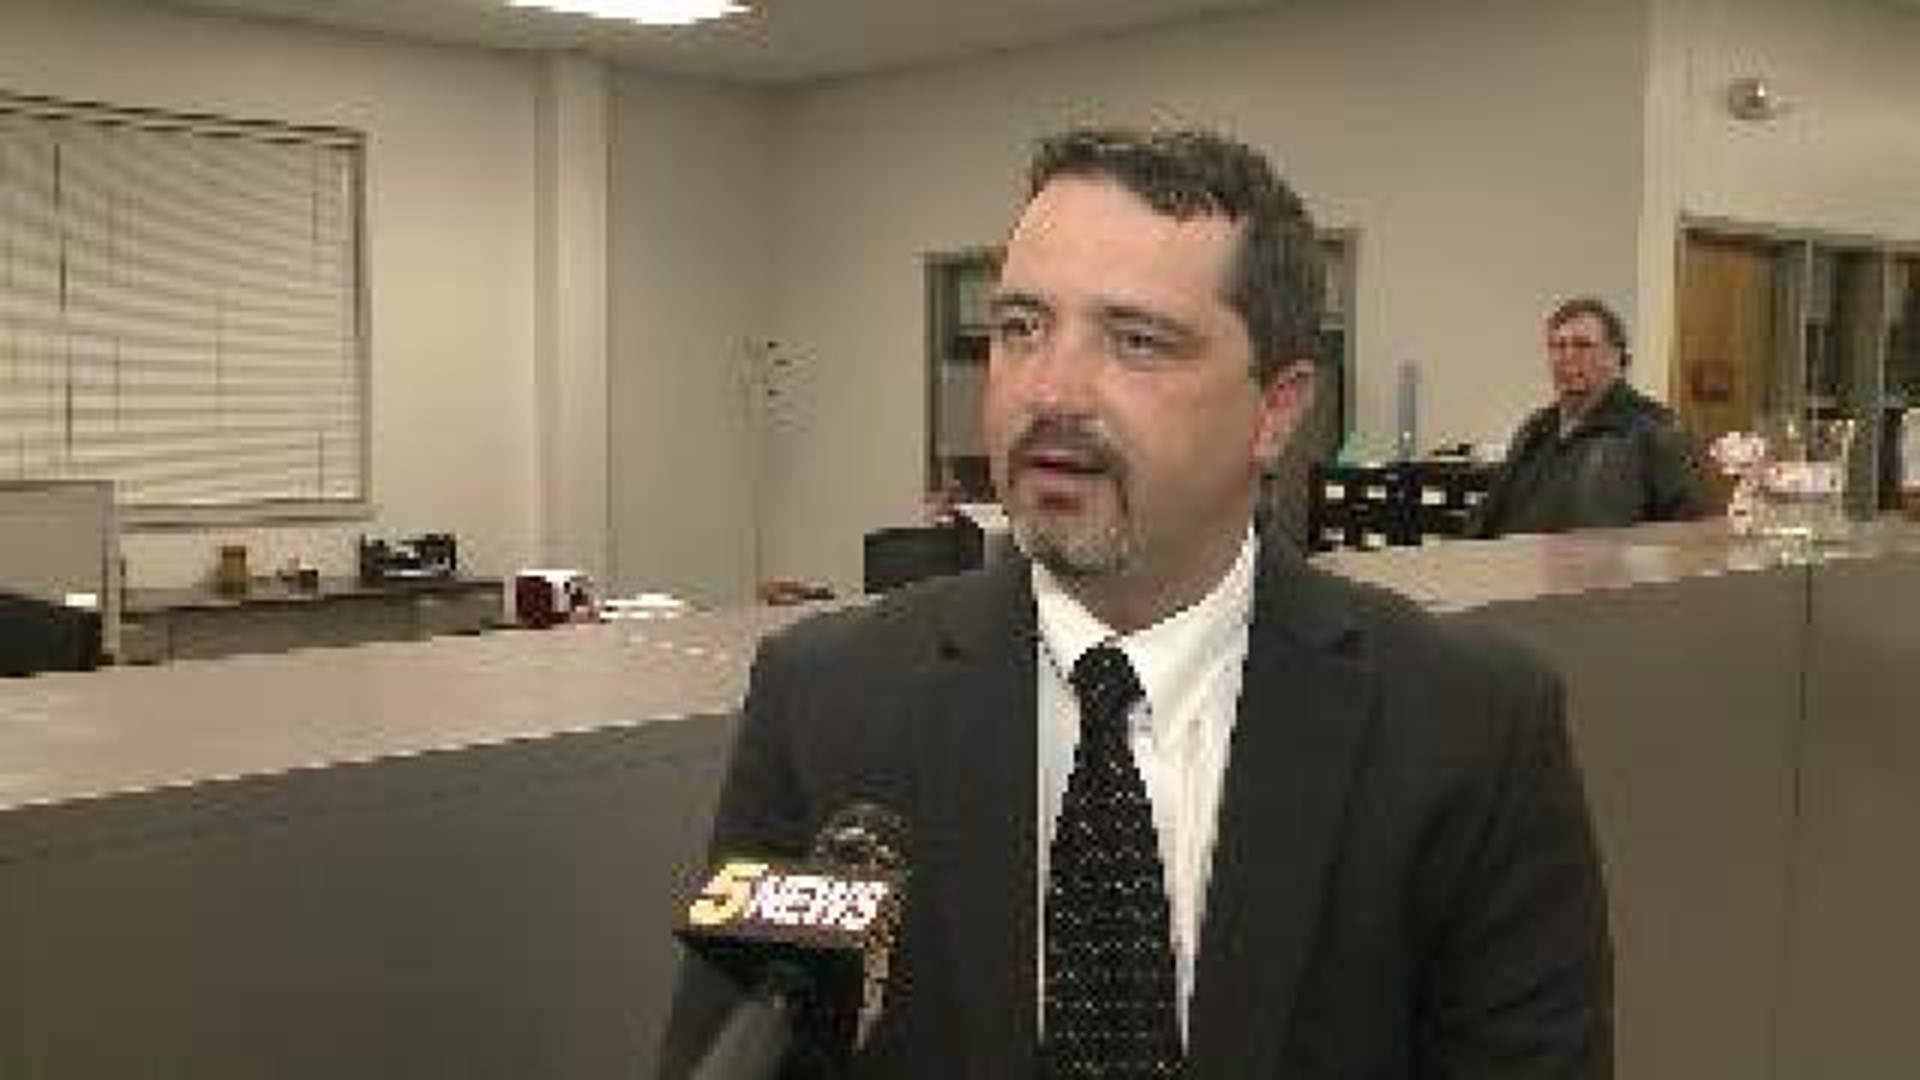 Benton County Sheriff Sworn as Clock Strikes 2013